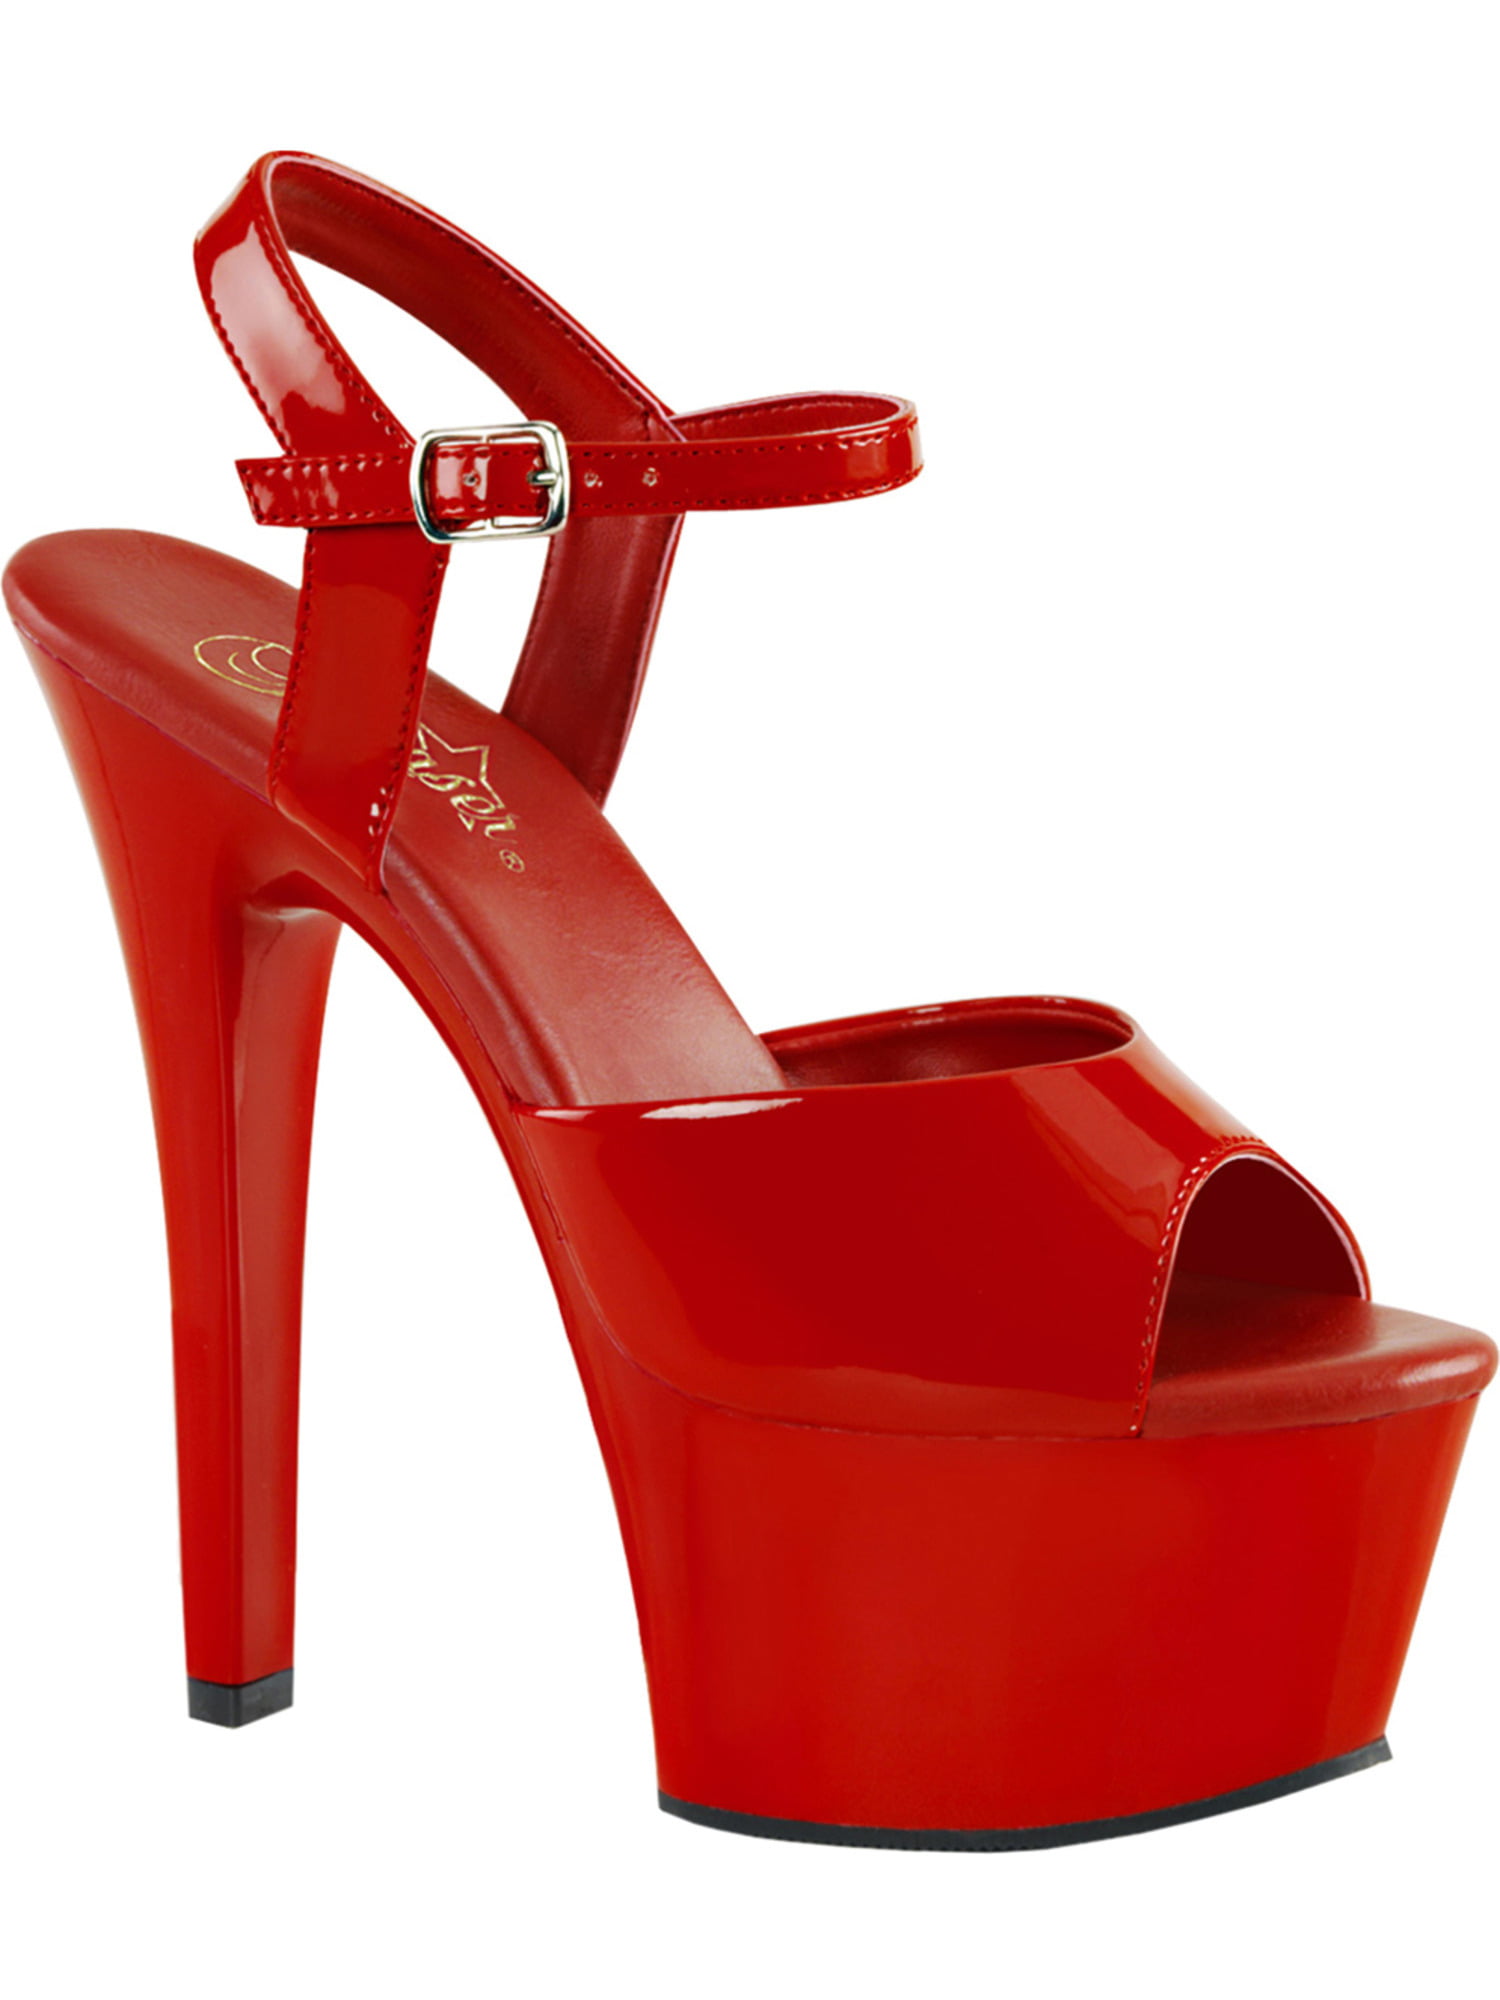 Pleaser - Womens Red Platform Heels Ankle Strap Sandals Open Toe Shoes ...